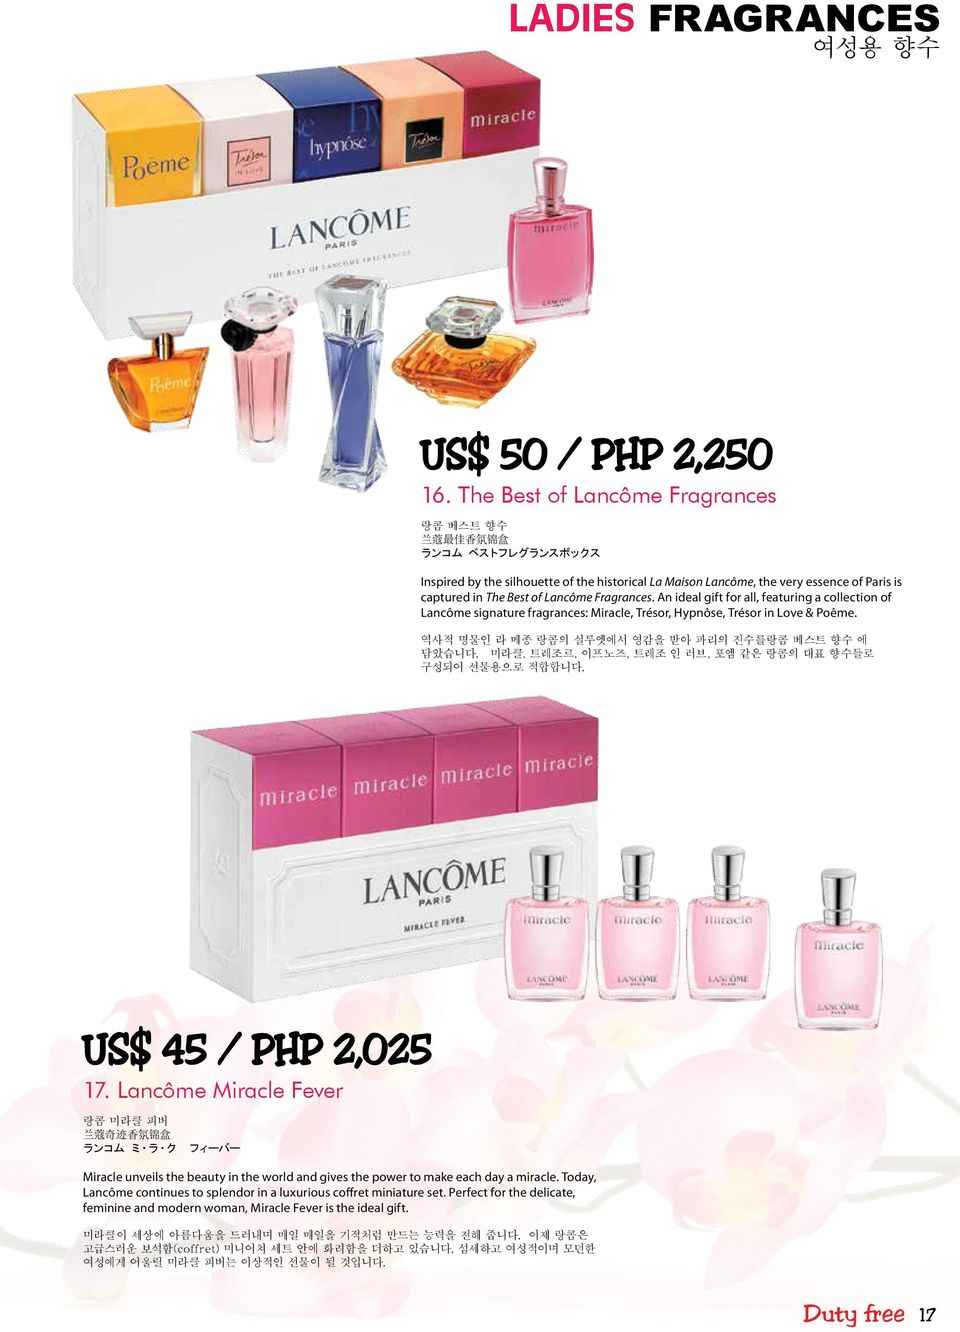 Lancôme Fragrances. An ideal gift for all, featuring a collection of Lancôme signature fragrances: Miracle, Trésor, Hypnôse, Trésor in Love & Poême.